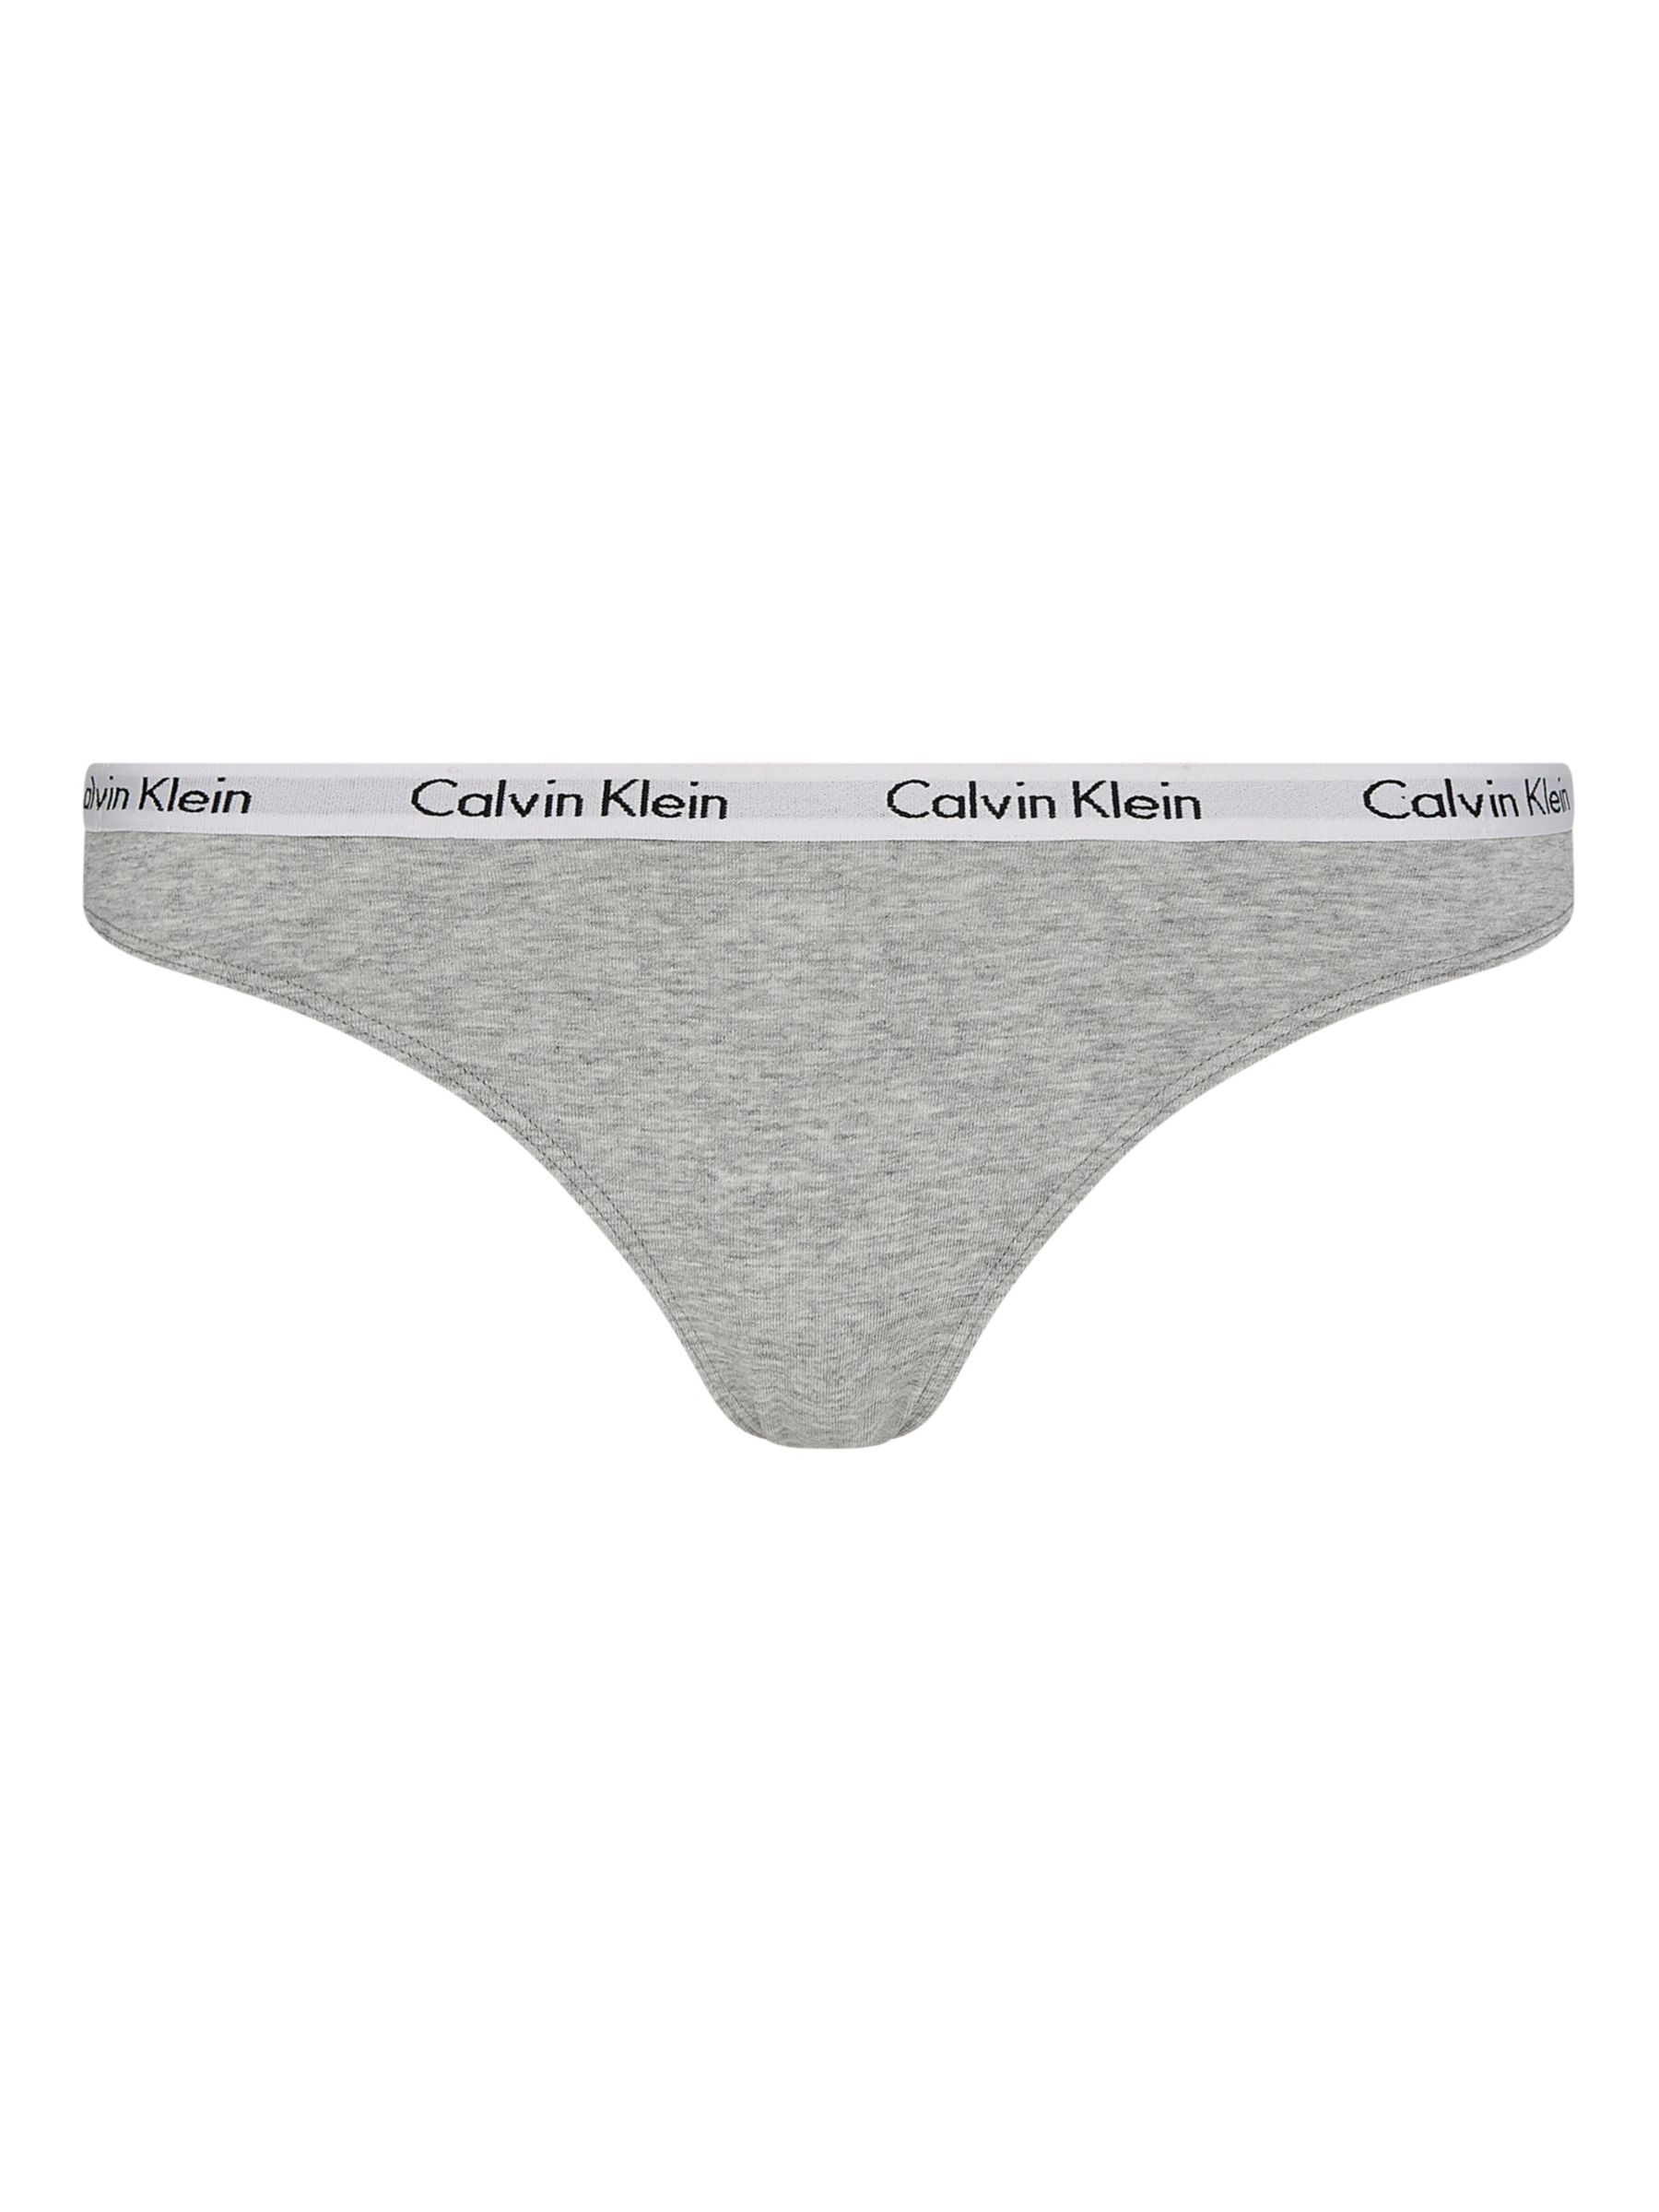 Buy Calvin Klein Carousel Bikini Knickers Online at johnlewis.com